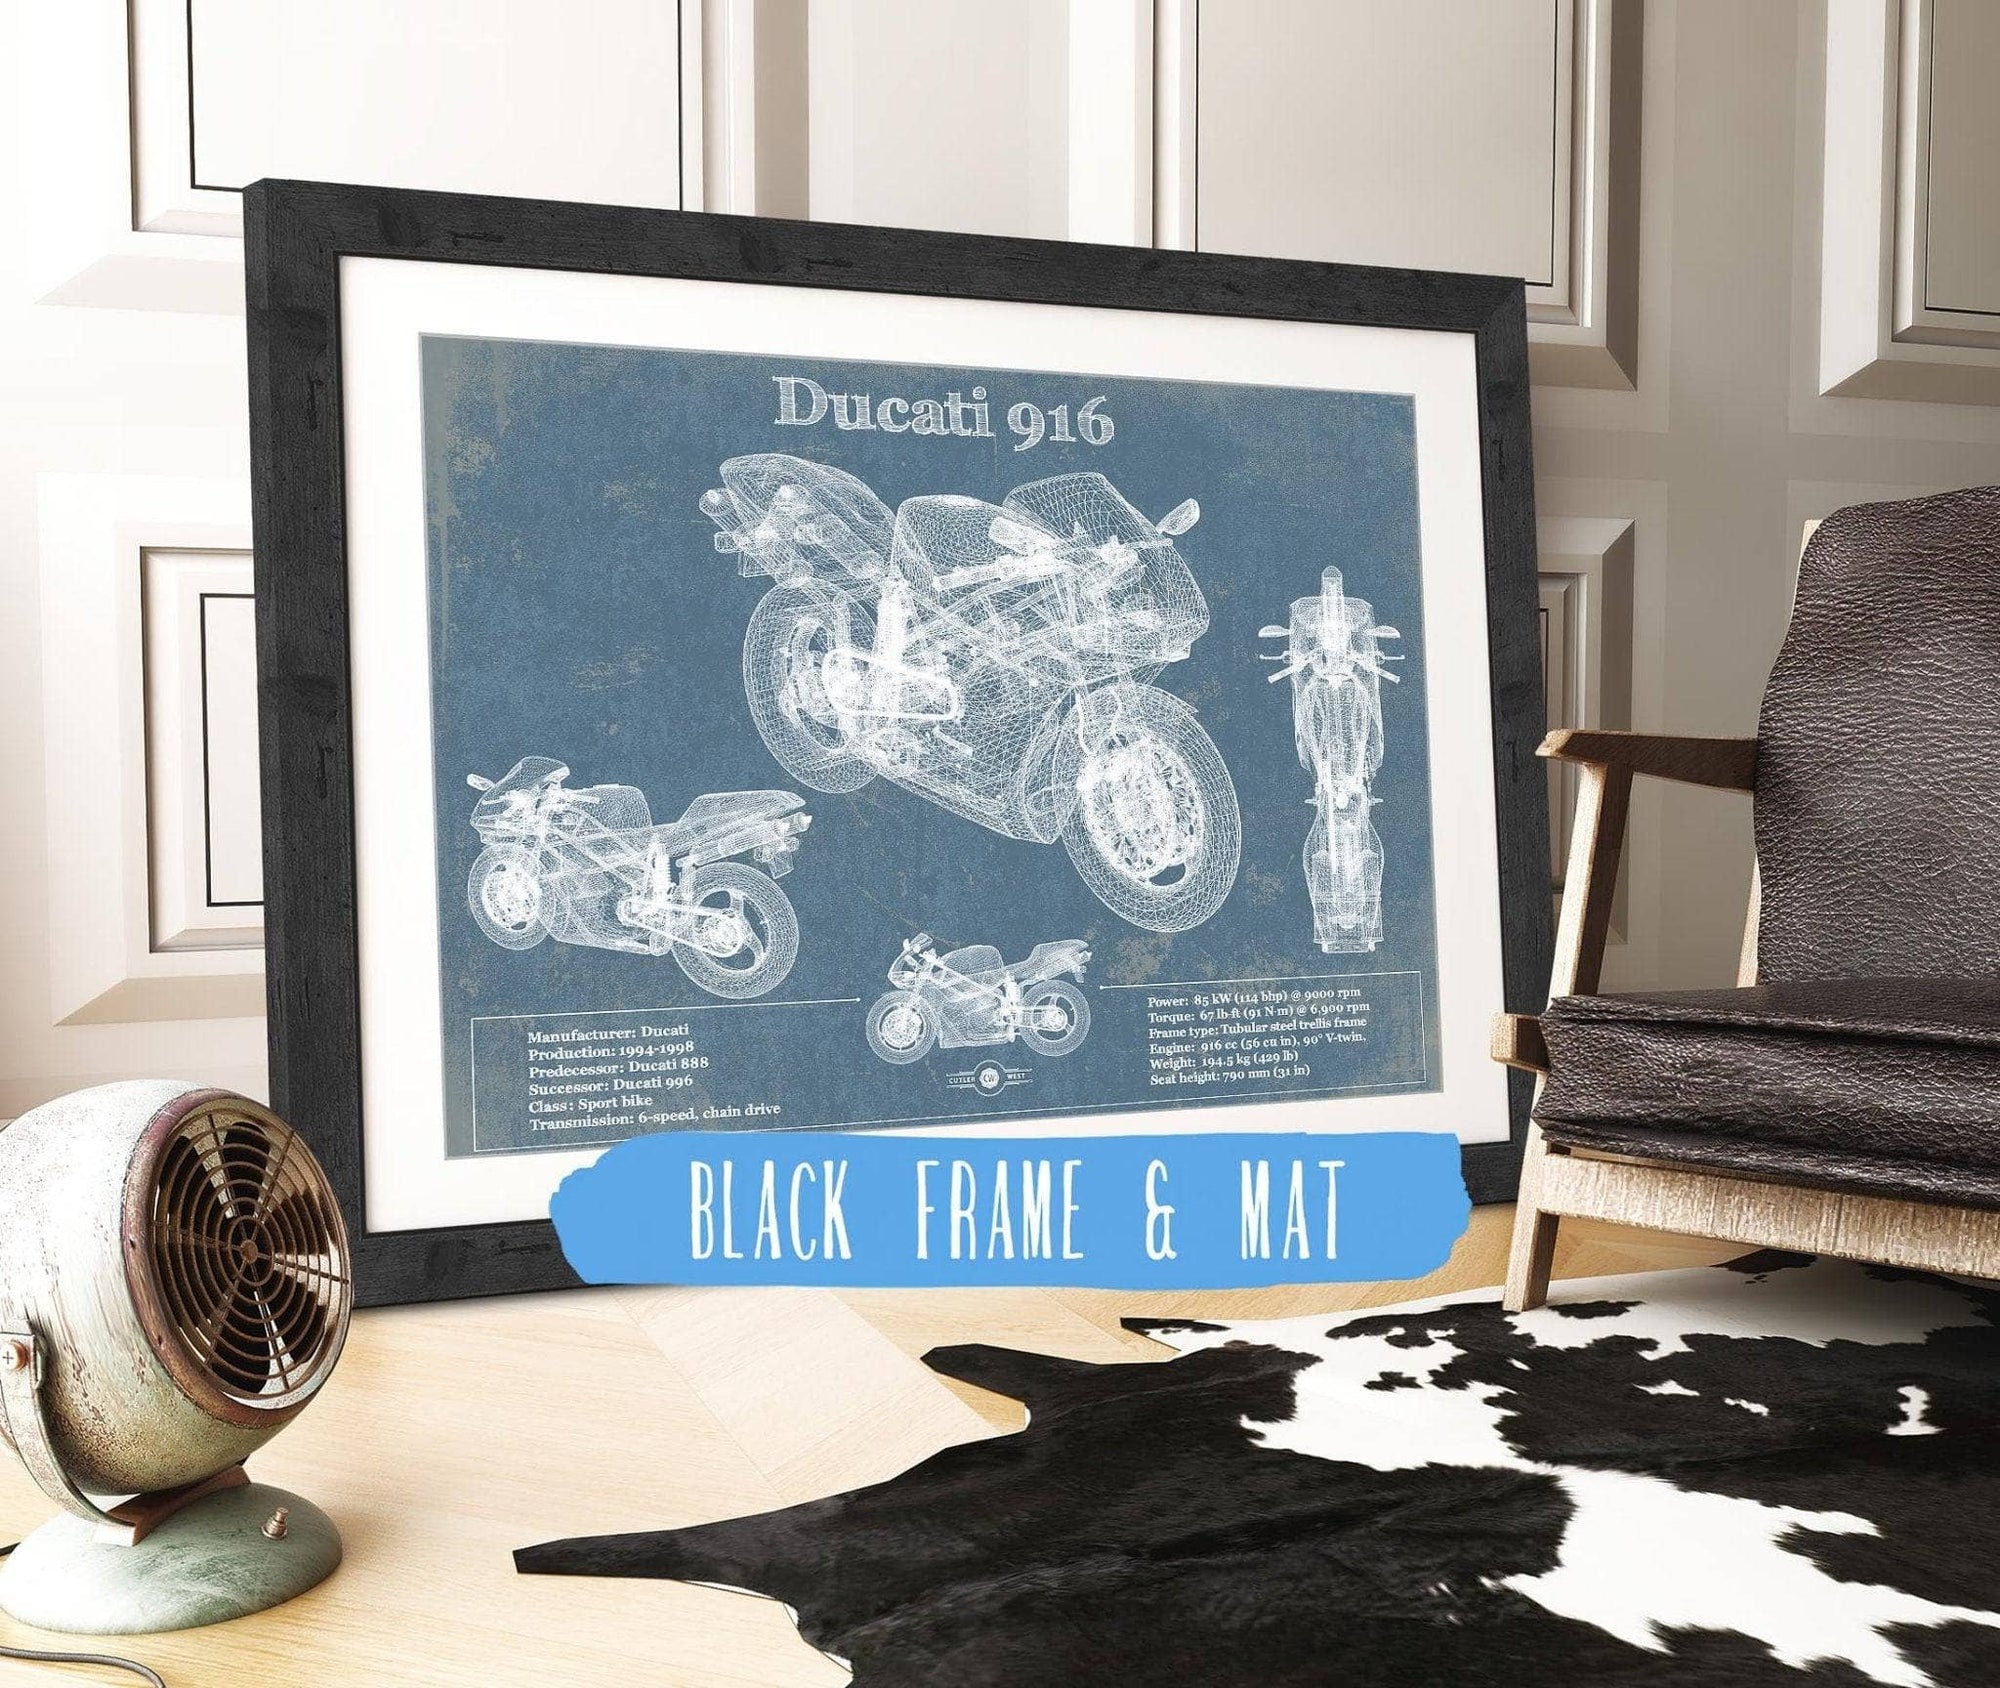 Cutler West 14" x 11" / Black Frame & Mat Ducati 916 Blueprint Motorcycle Patent Print 887772823_57913